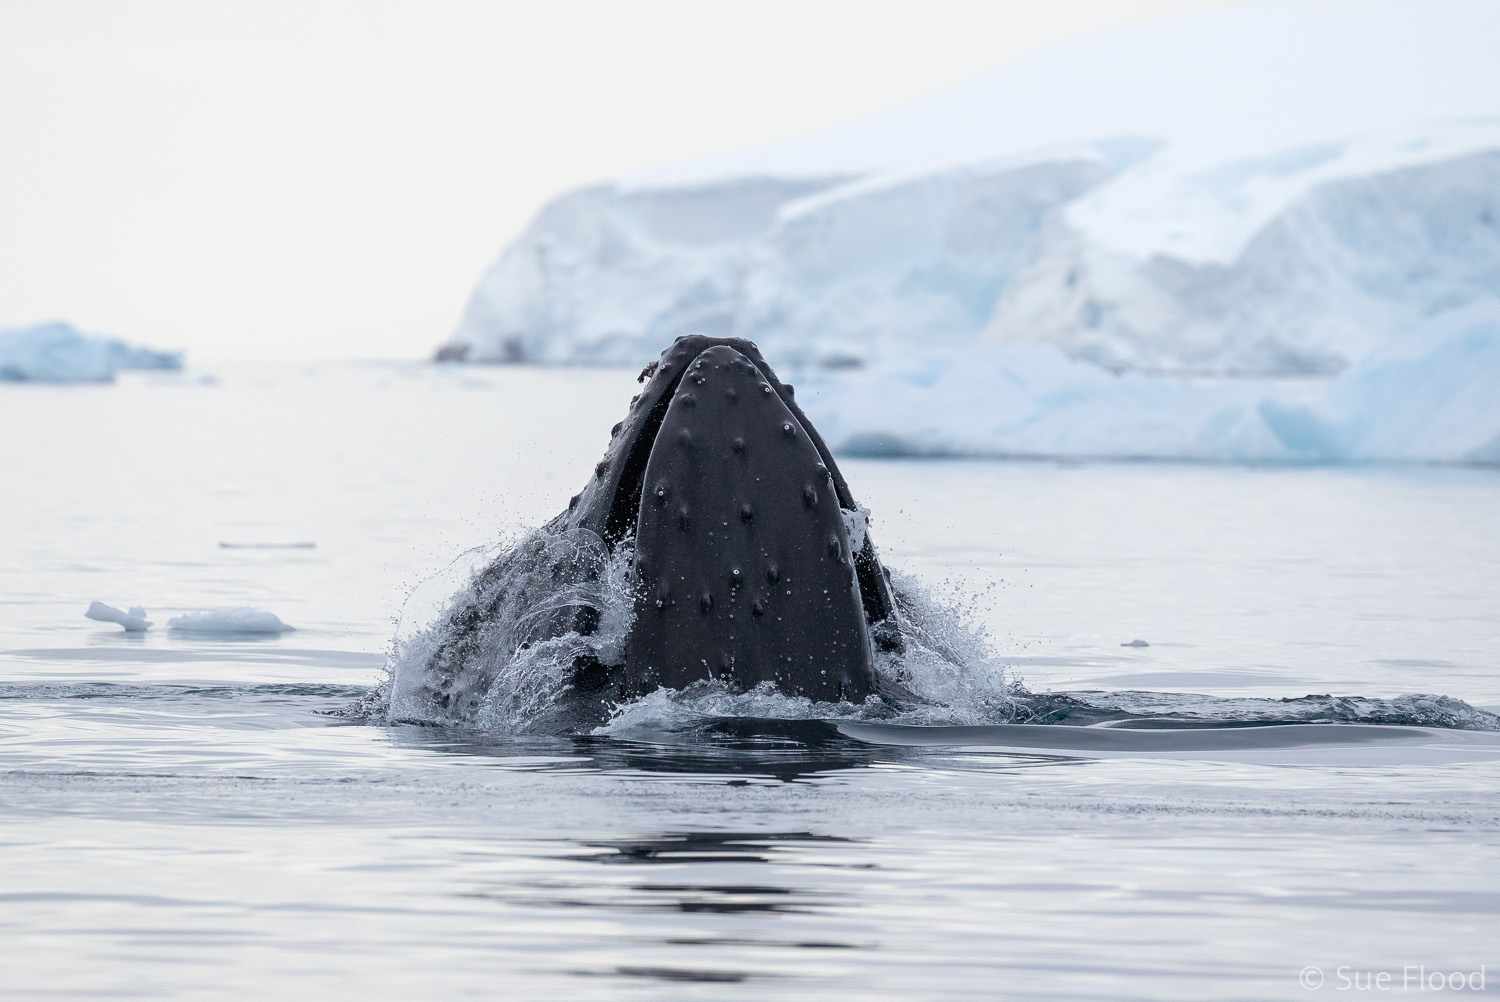 Lunge-feeding humpback whale, Antarctic peninsula